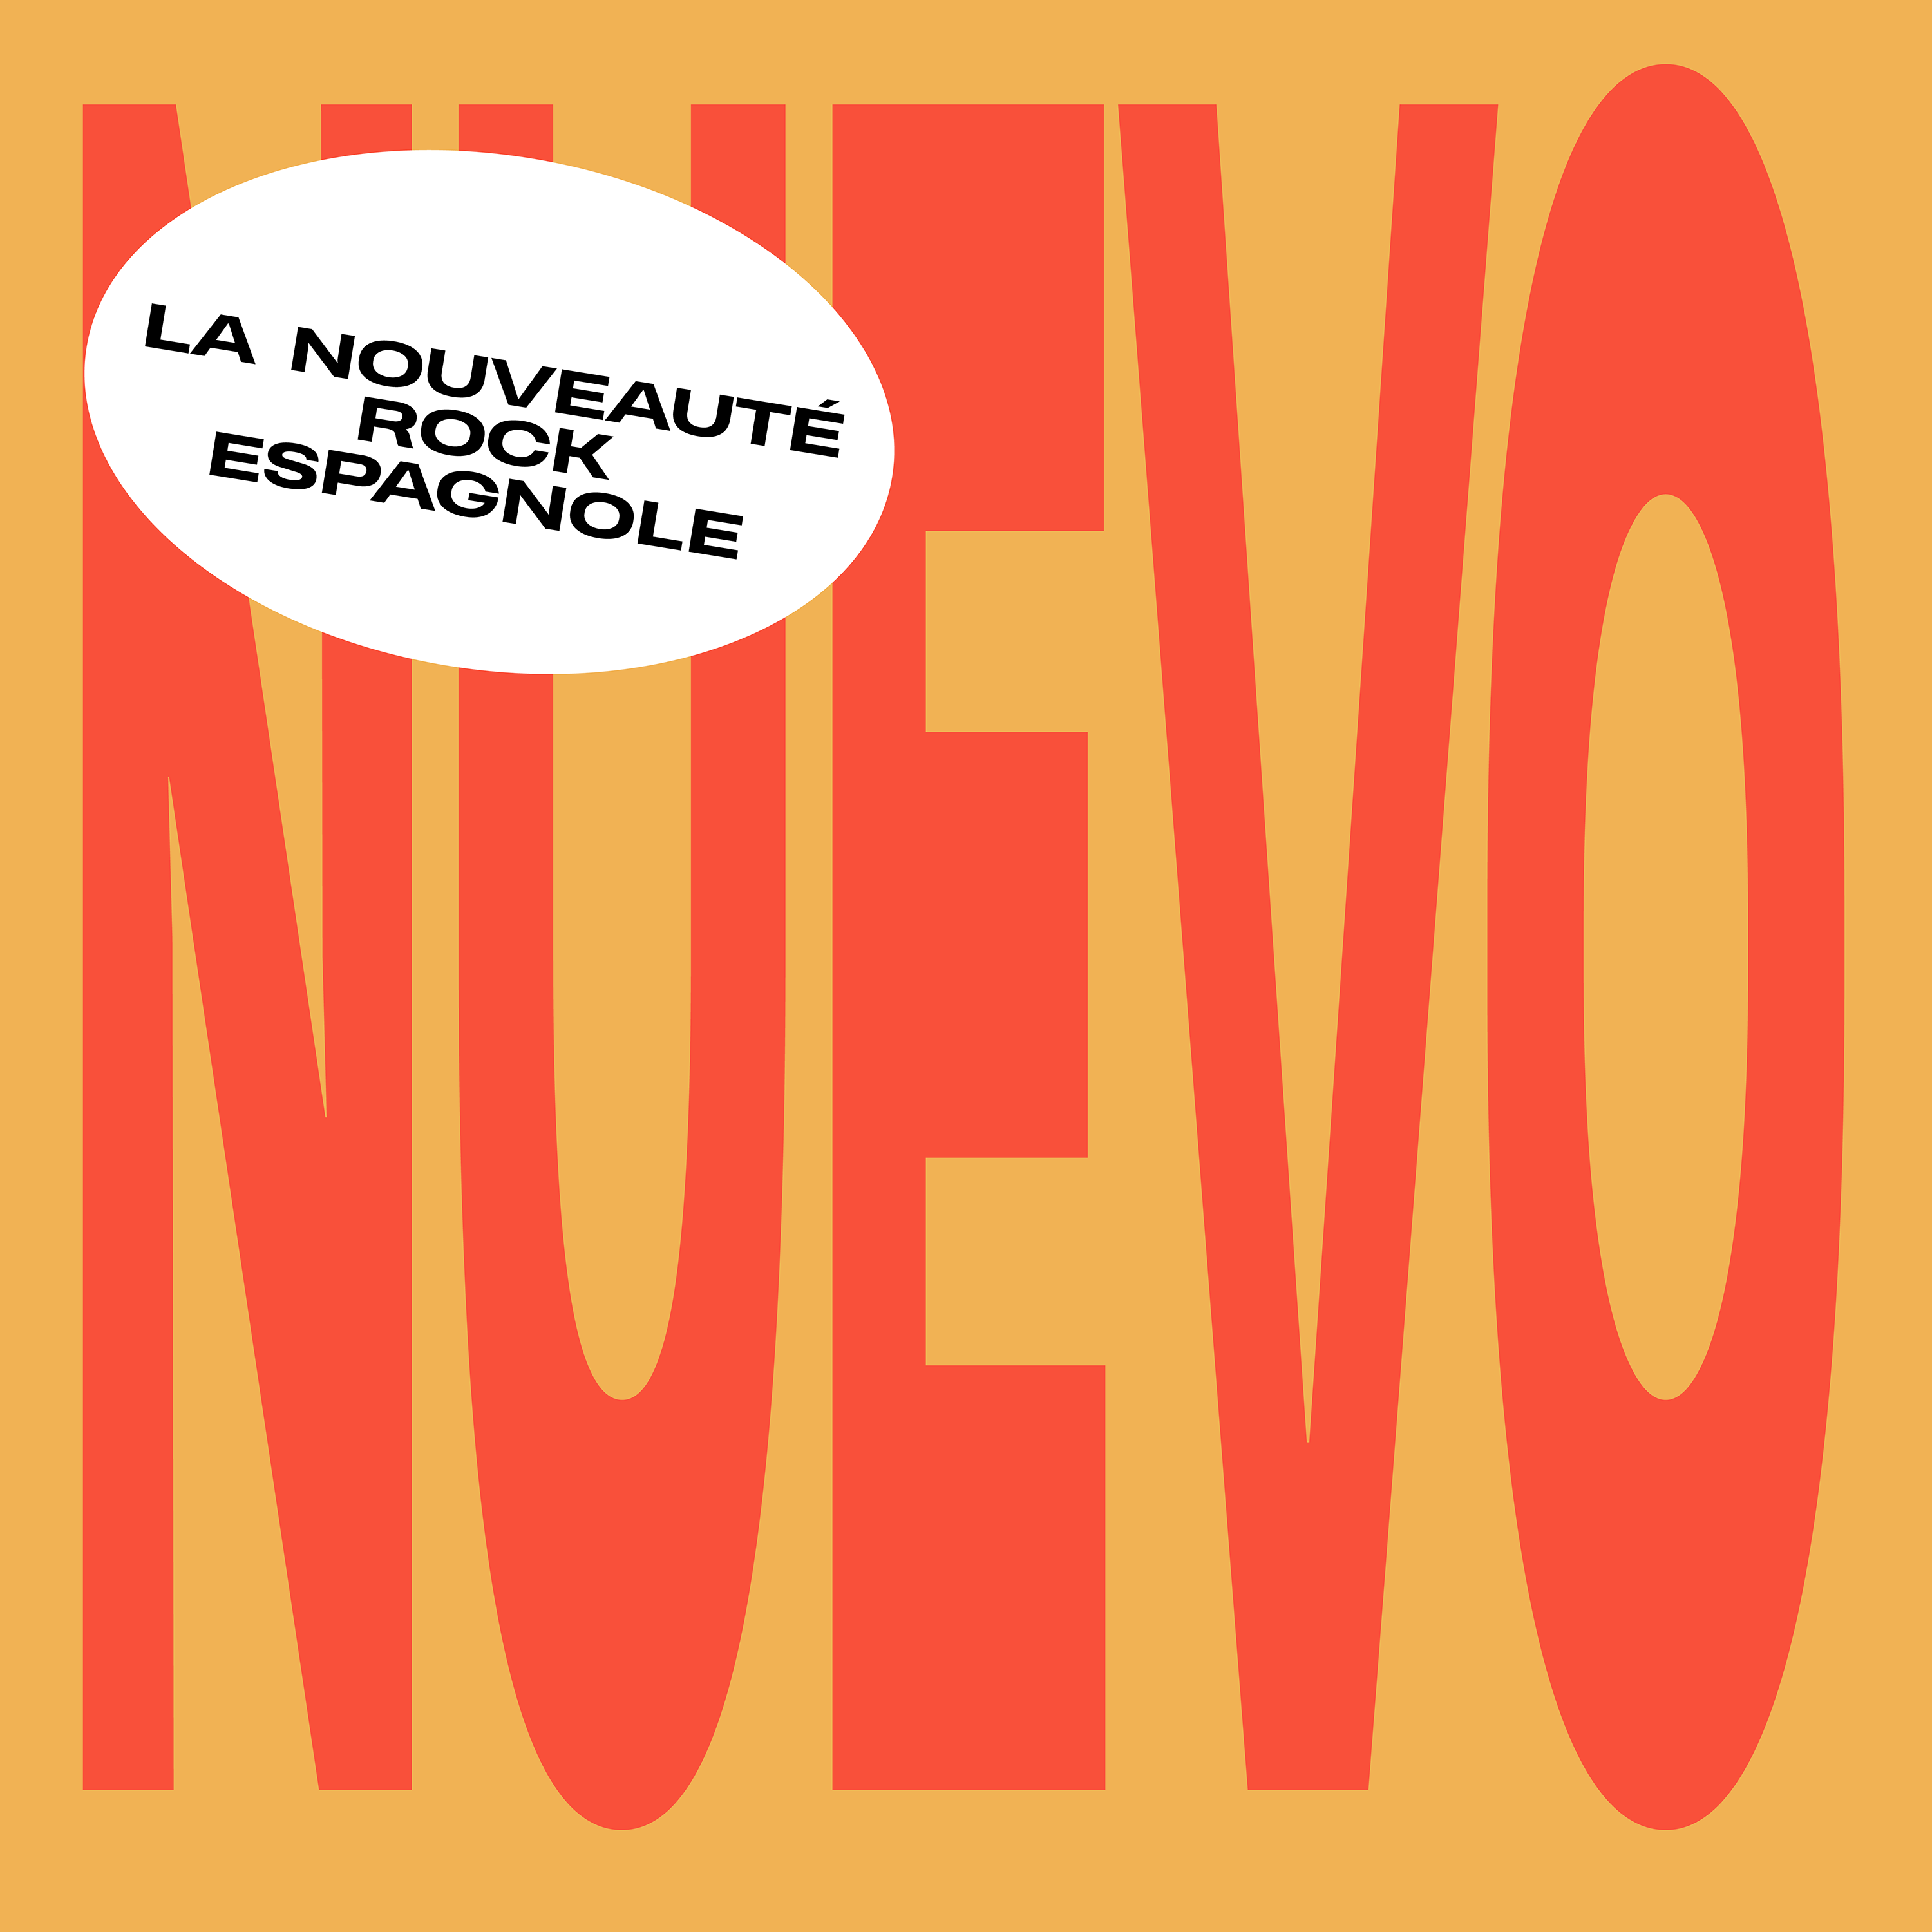 LA NOUVEAUTÉ ROCK ESPAGNOLE #38 - Nadye "Nuestra Revolucion"